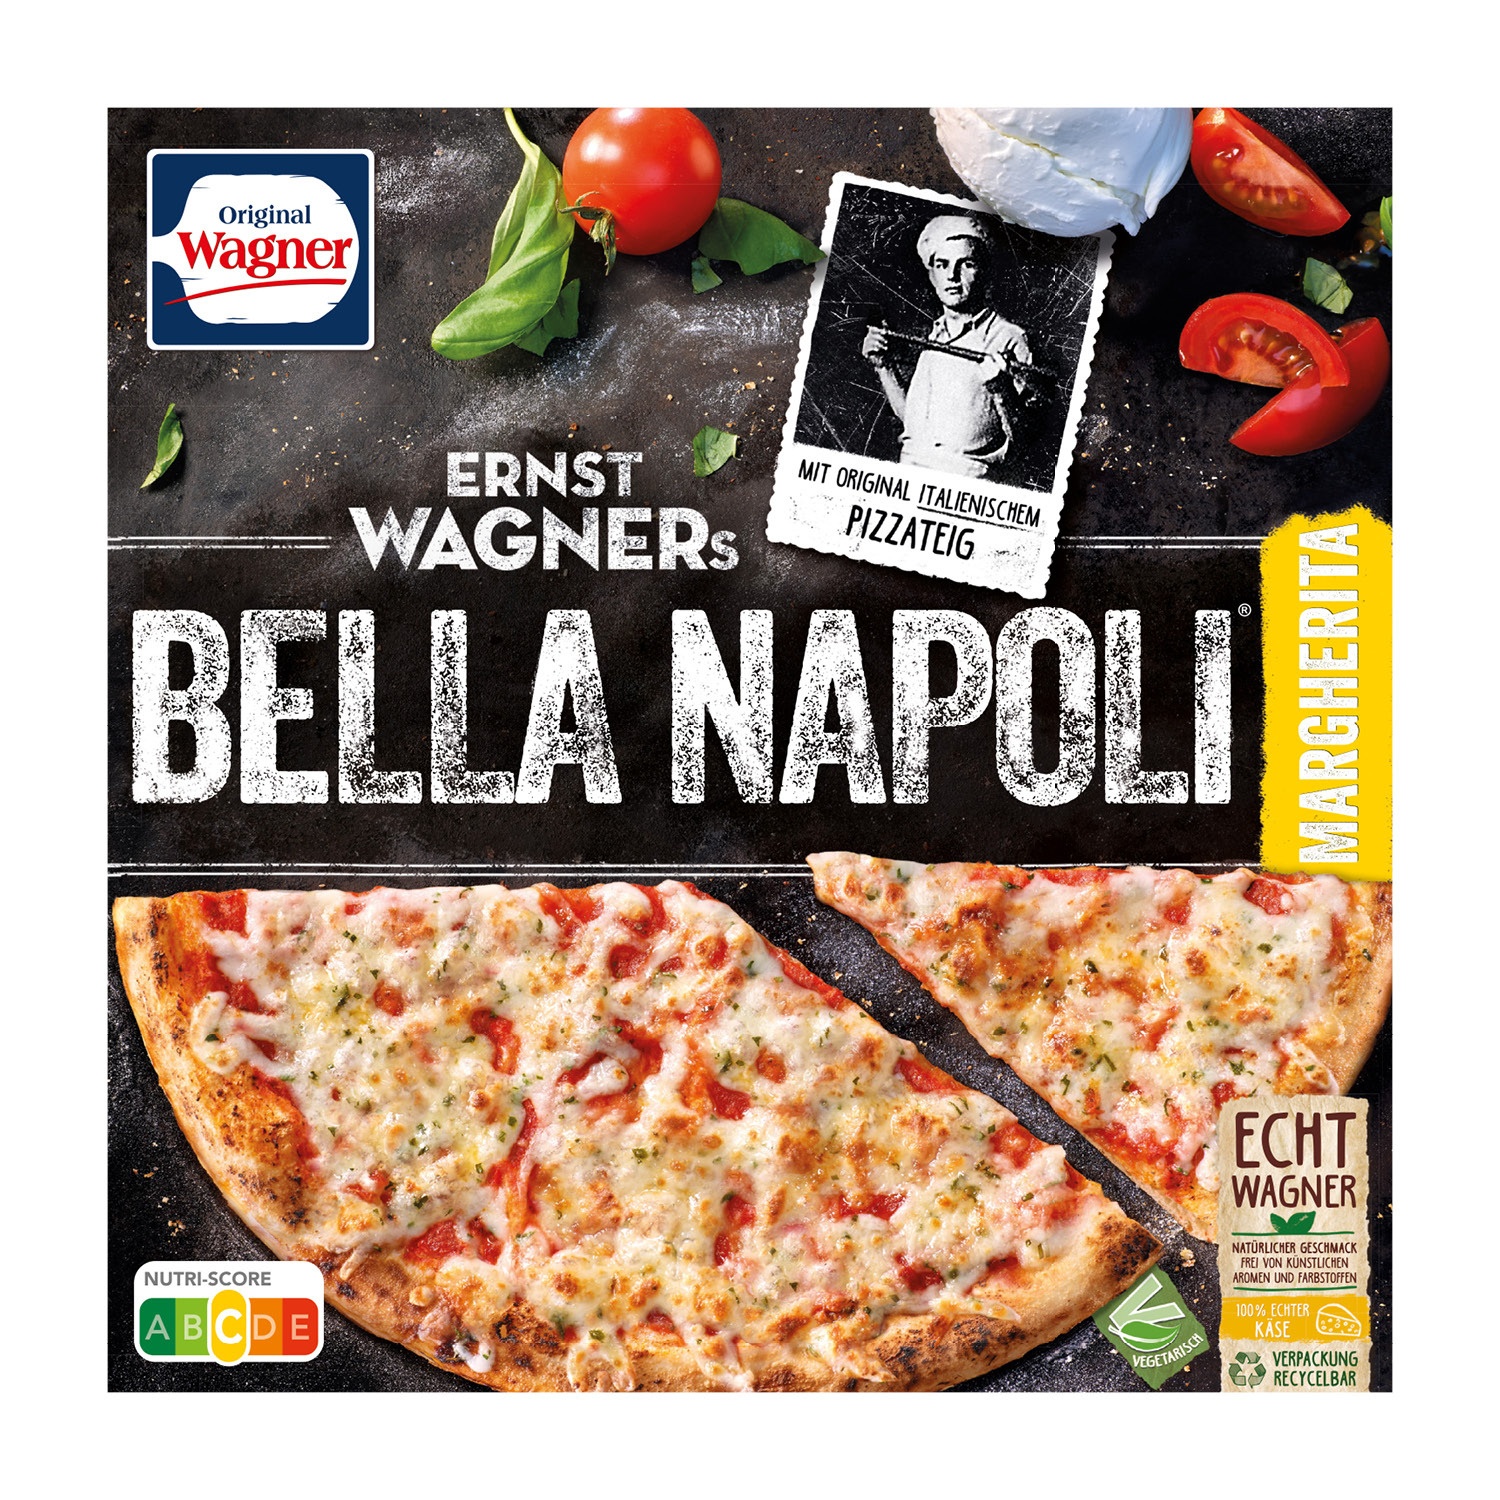 ORIGINAL WAGNER Ernst Wagners Bella Napoli Pizza 425 g